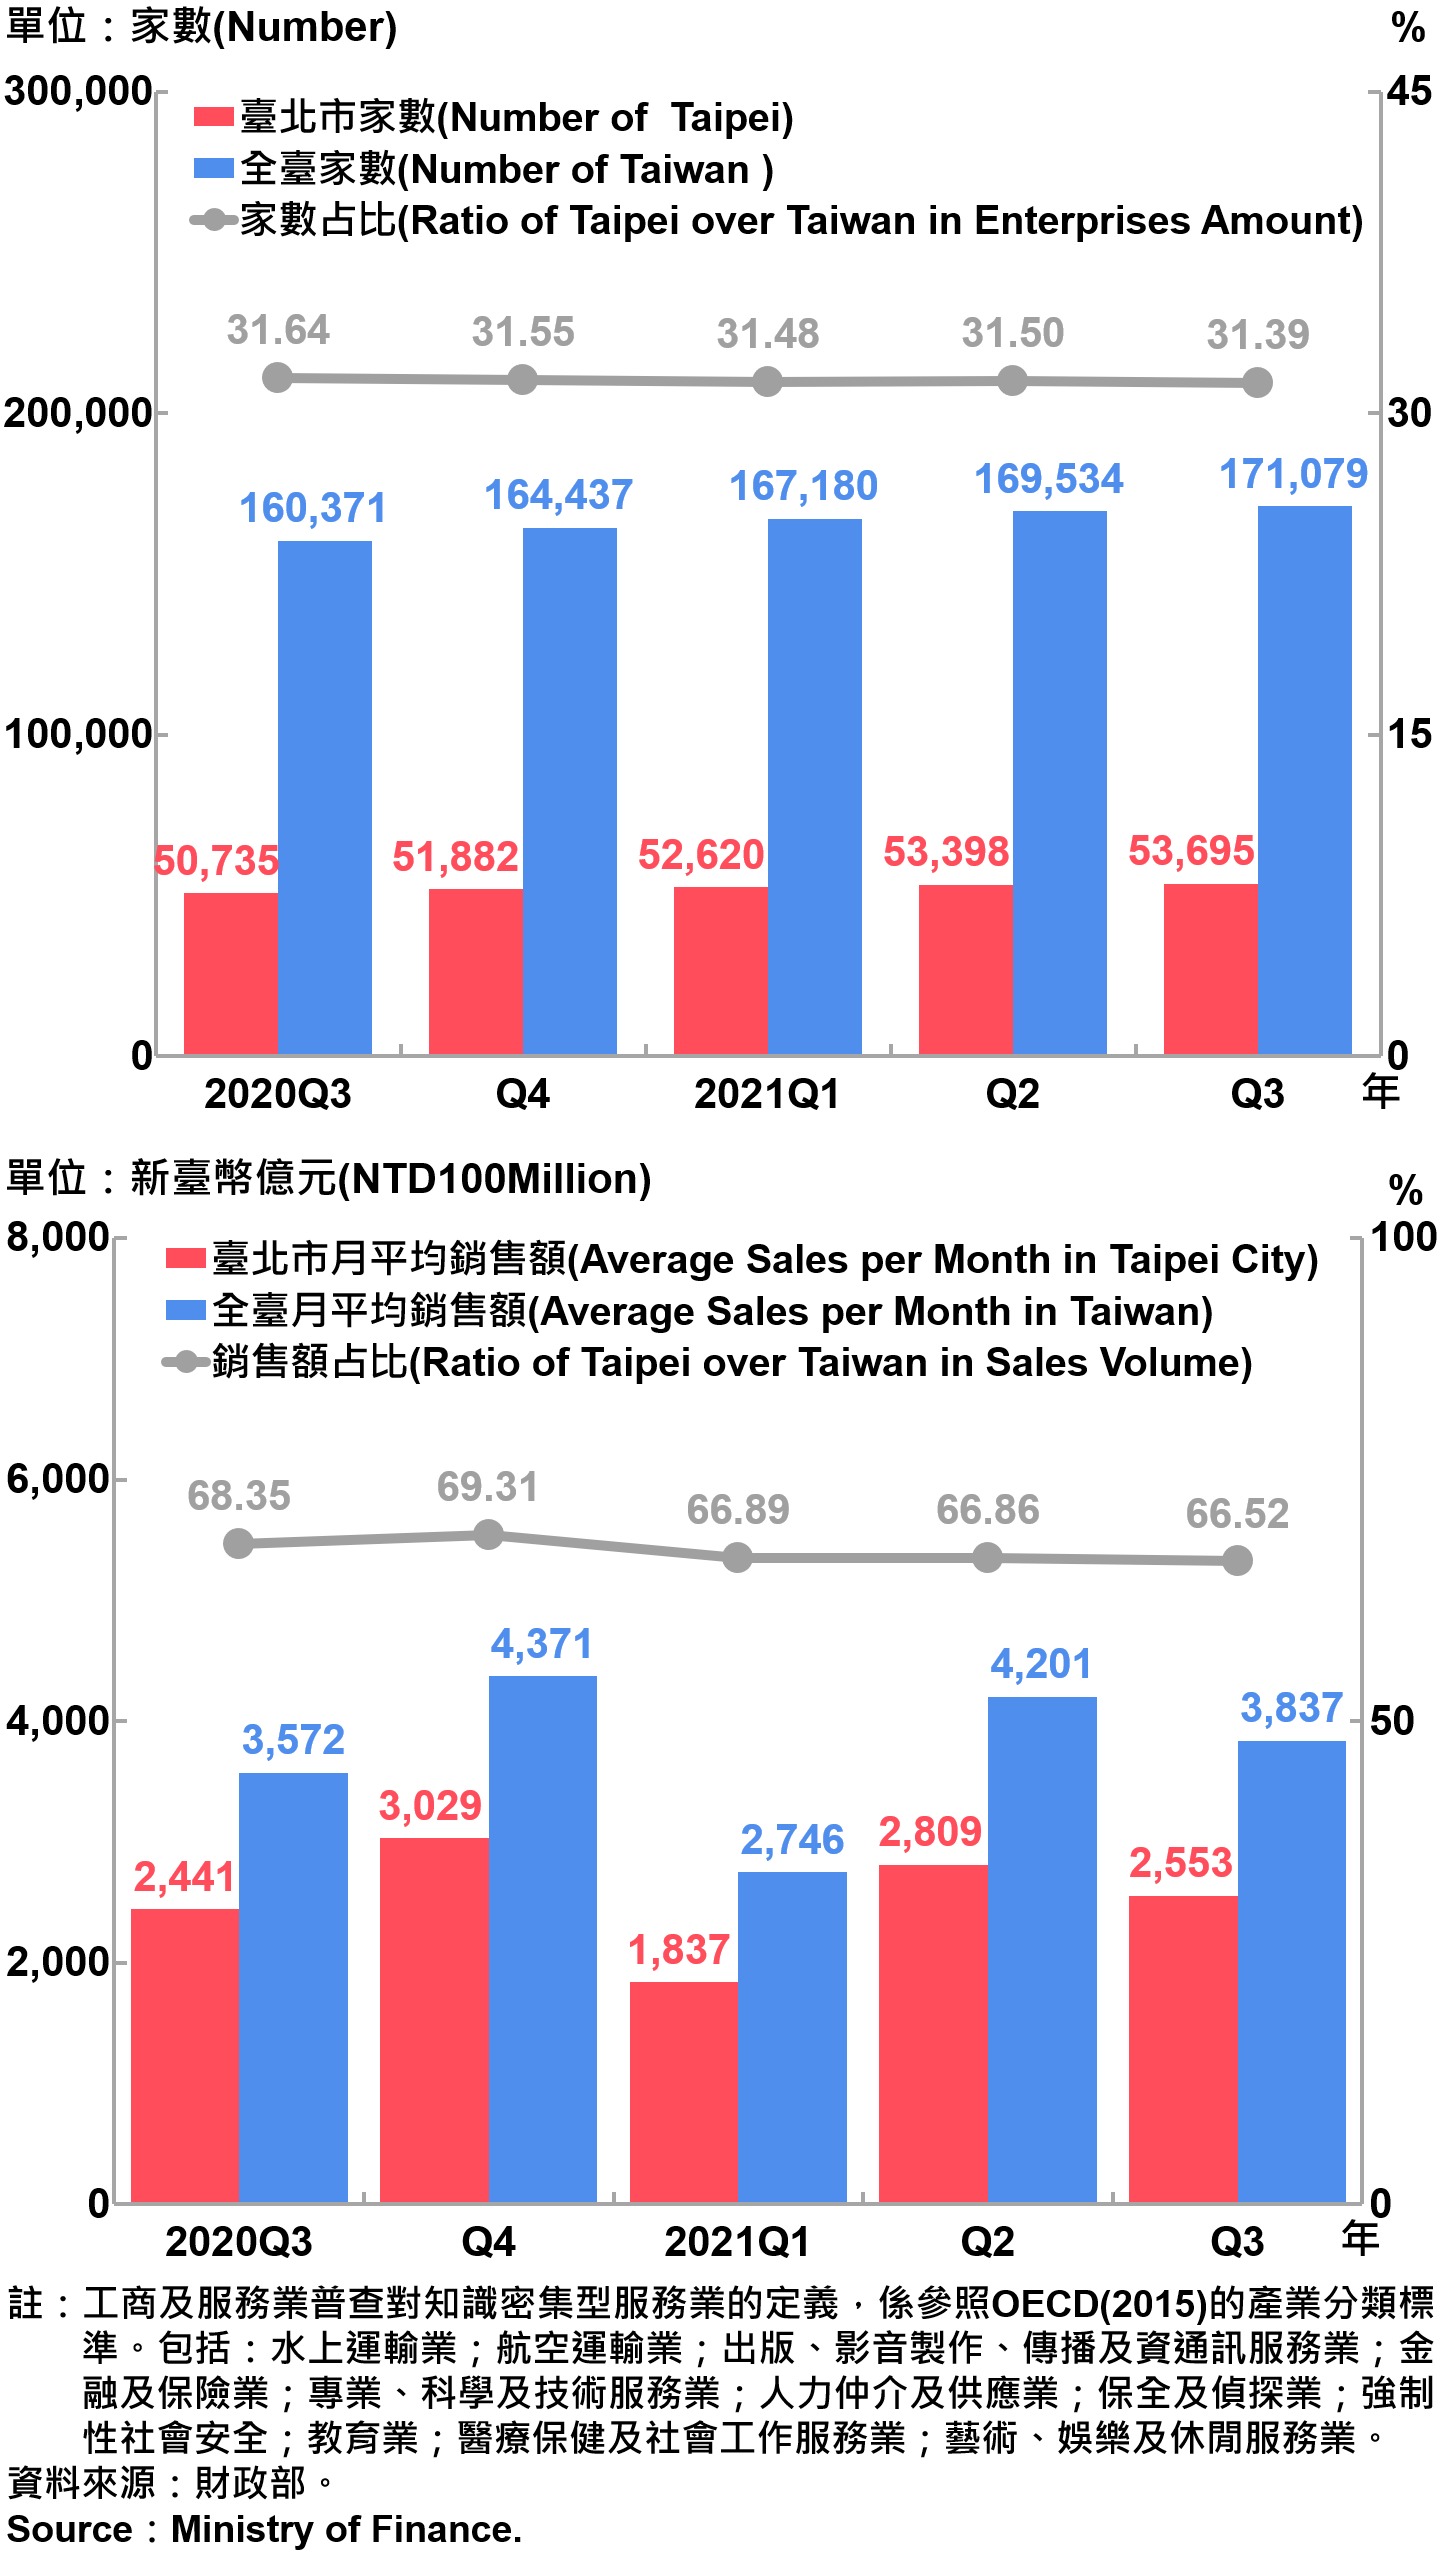 臺北市知識密集型服務業之家數及銷售額—2021Q3　Statistics Knowledge Intensive Service Industry in Taipei City—2021Q3